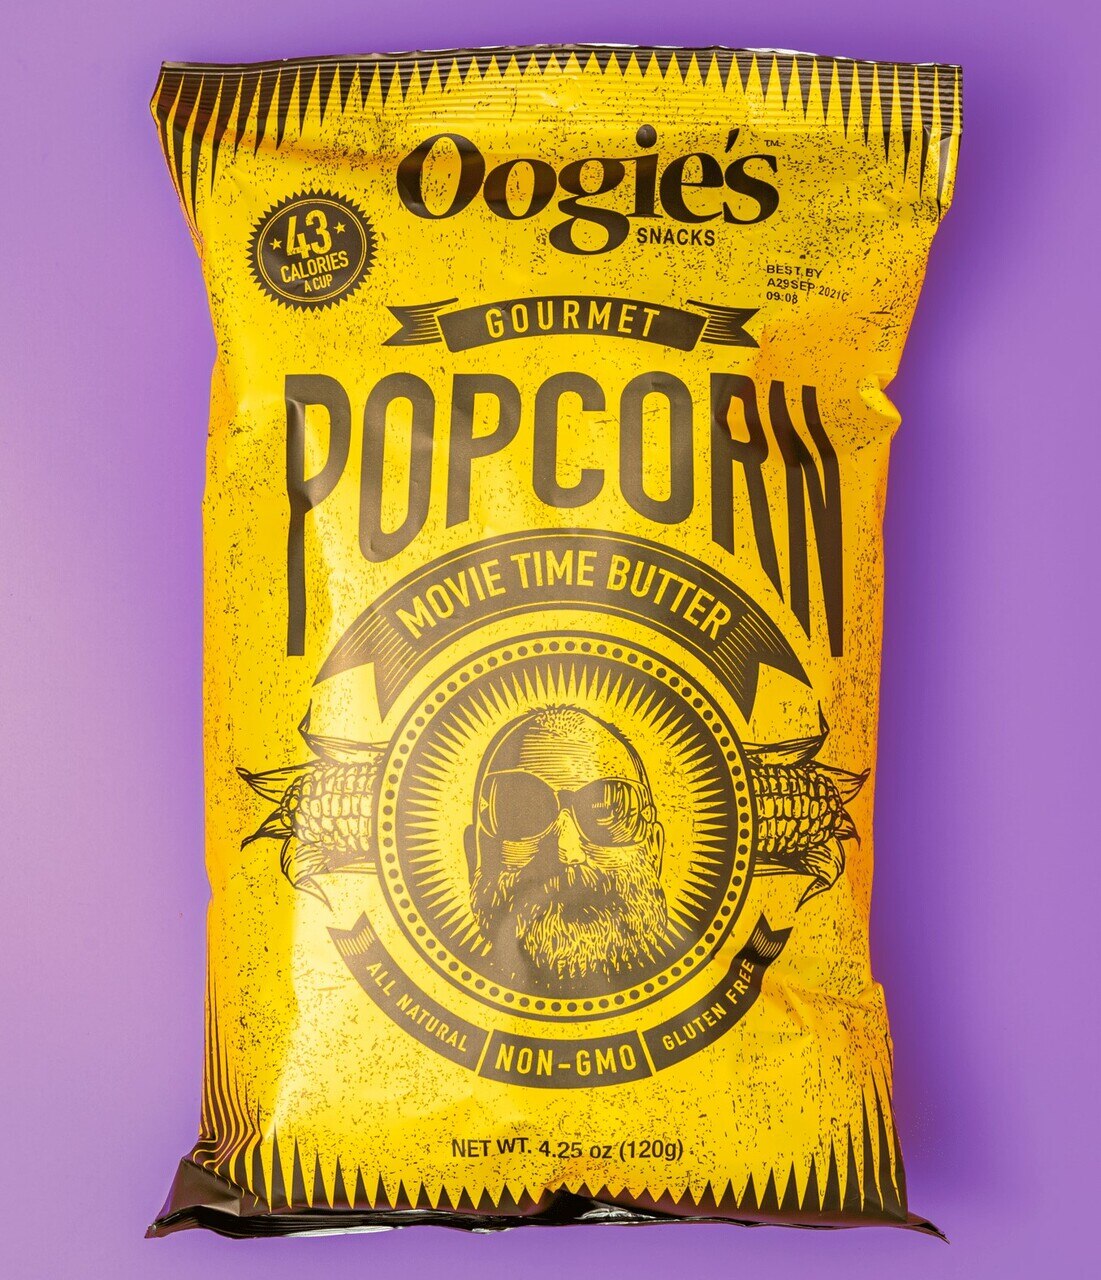 Movie time butter gourmet popcorn bag